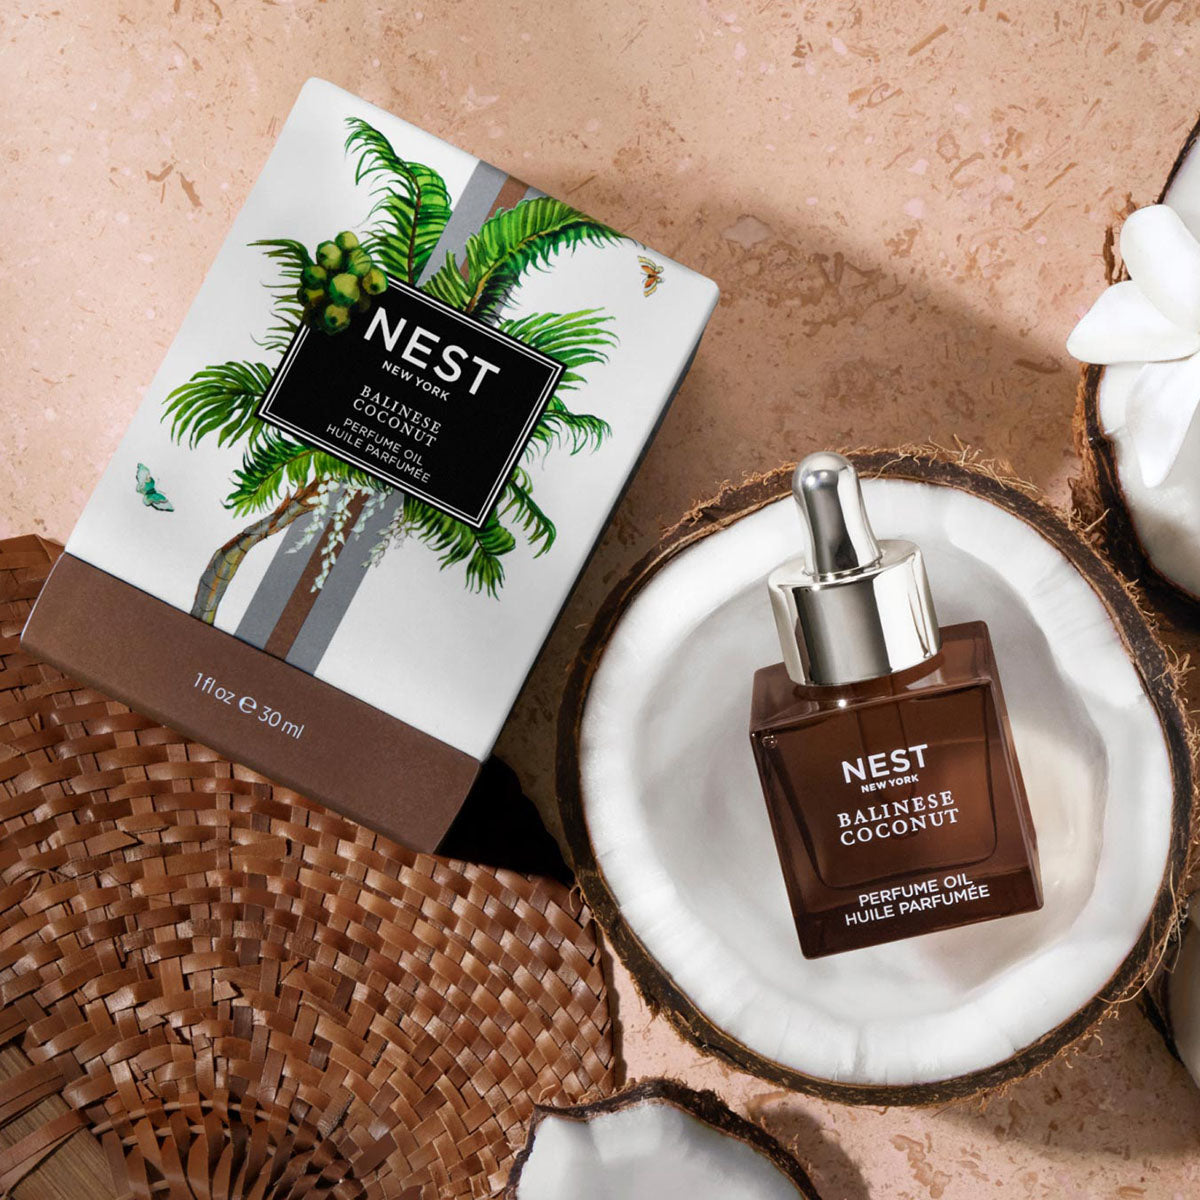 Nest Perfume Oil 30mL/1.0 fl oz. - Balinese Coconut